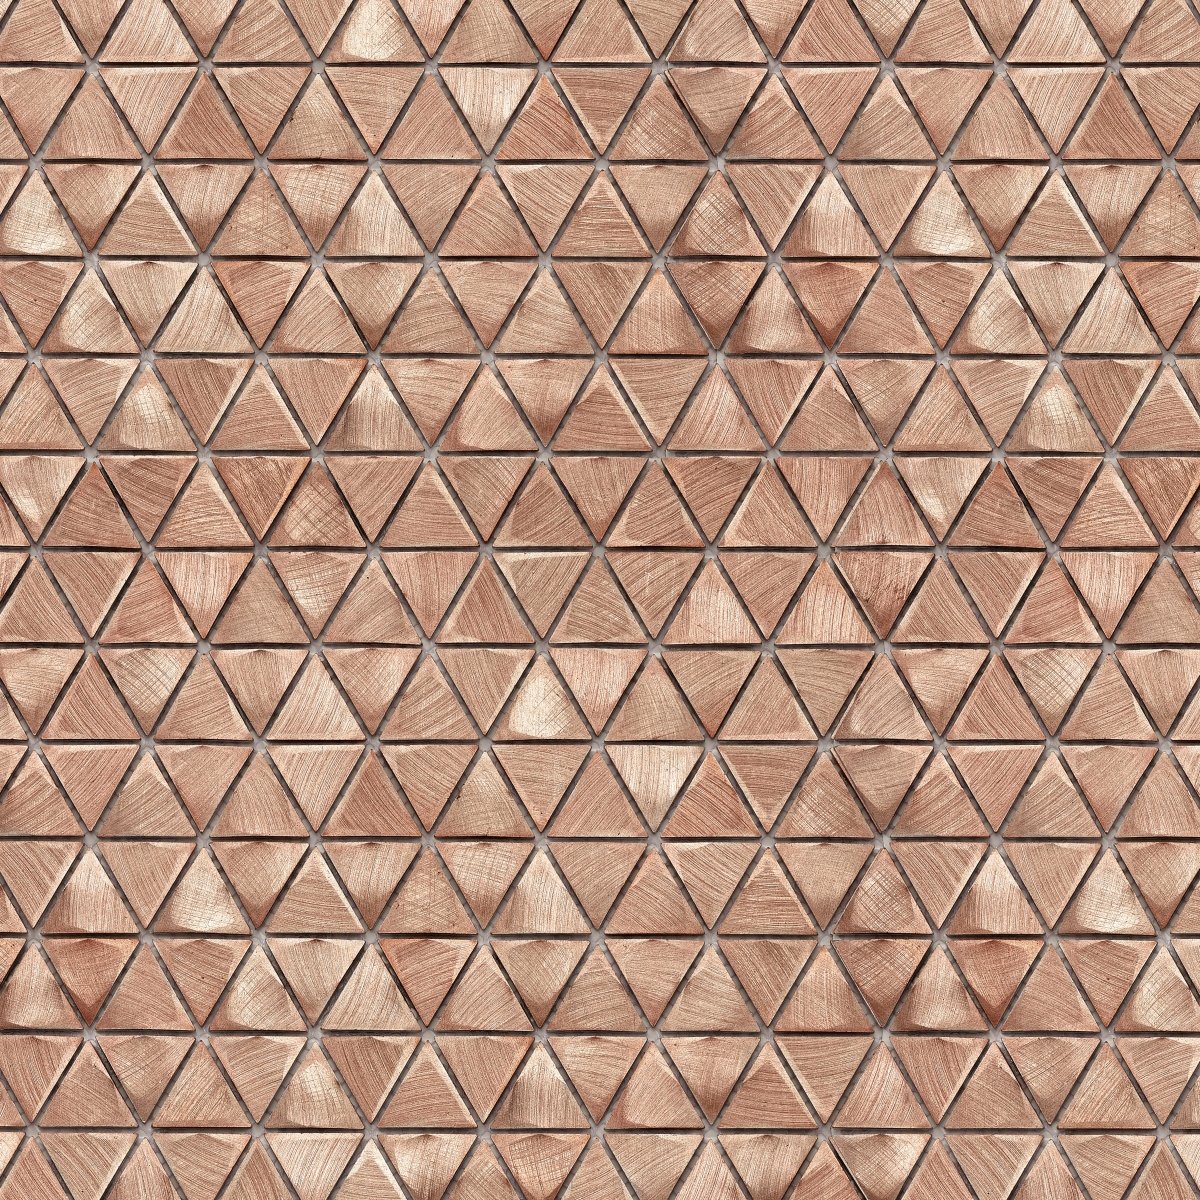 Metalico Triangle Copper Metal Mosaic